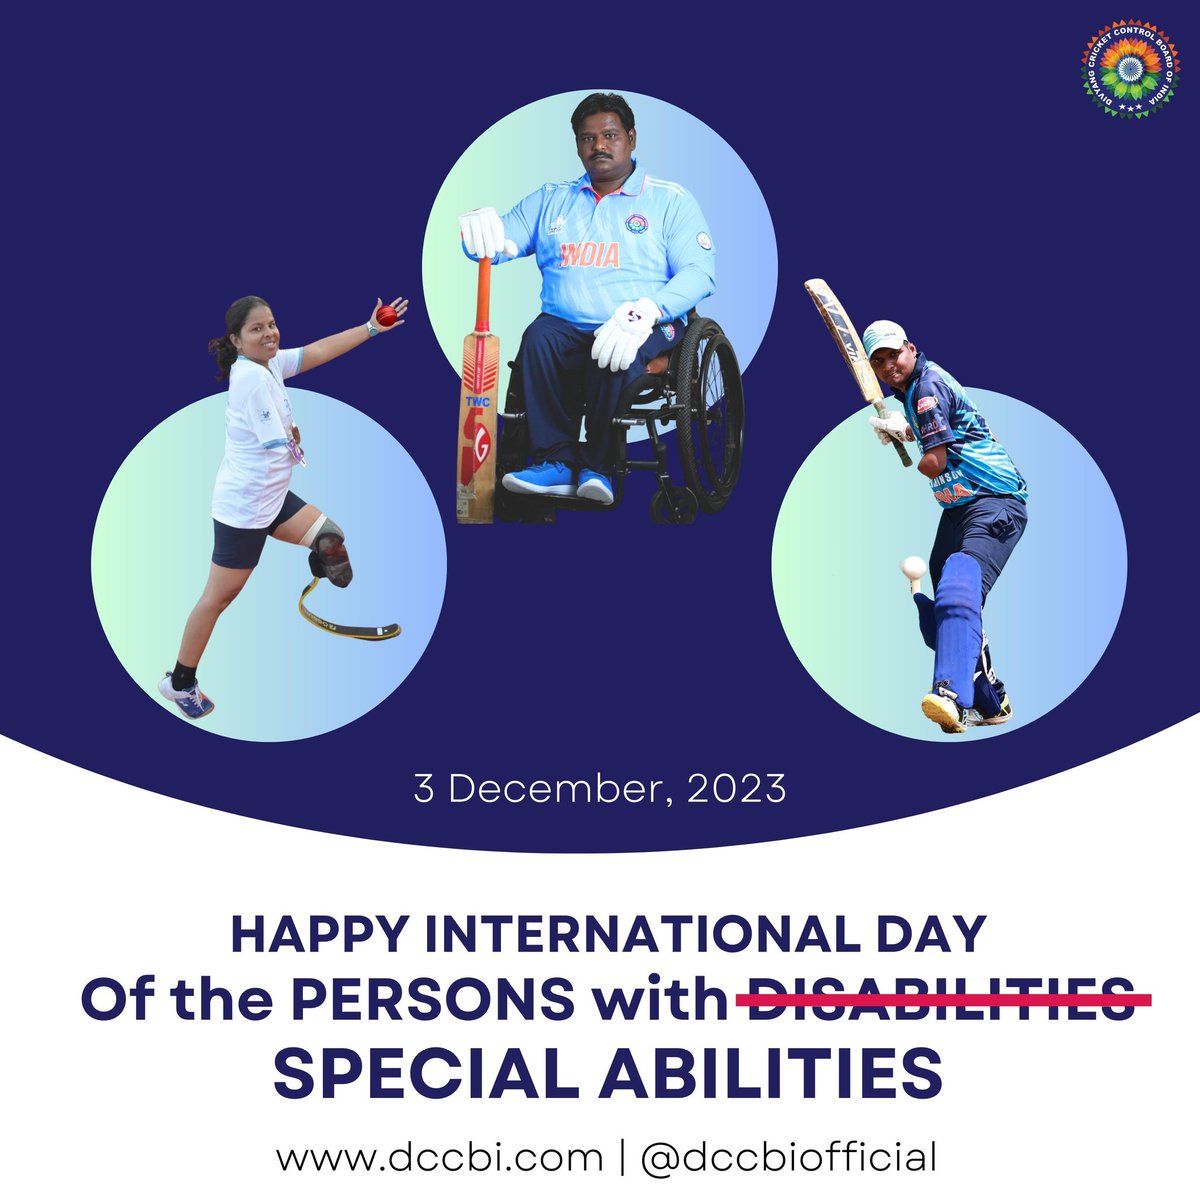 Happy International Day of the Persons with D̶I̶S̶A̶B̶I̶L̶I̶T̶I̶E̶S̶ Special Abilities ✨
.
#DCCBI #wheelchaircricket #divyangcricket #divyangjancricket #DisabilityCricket #internationaldayofthepeoplewithdisabilities #specialabilities  #Divyangjan #worlddisabilityday